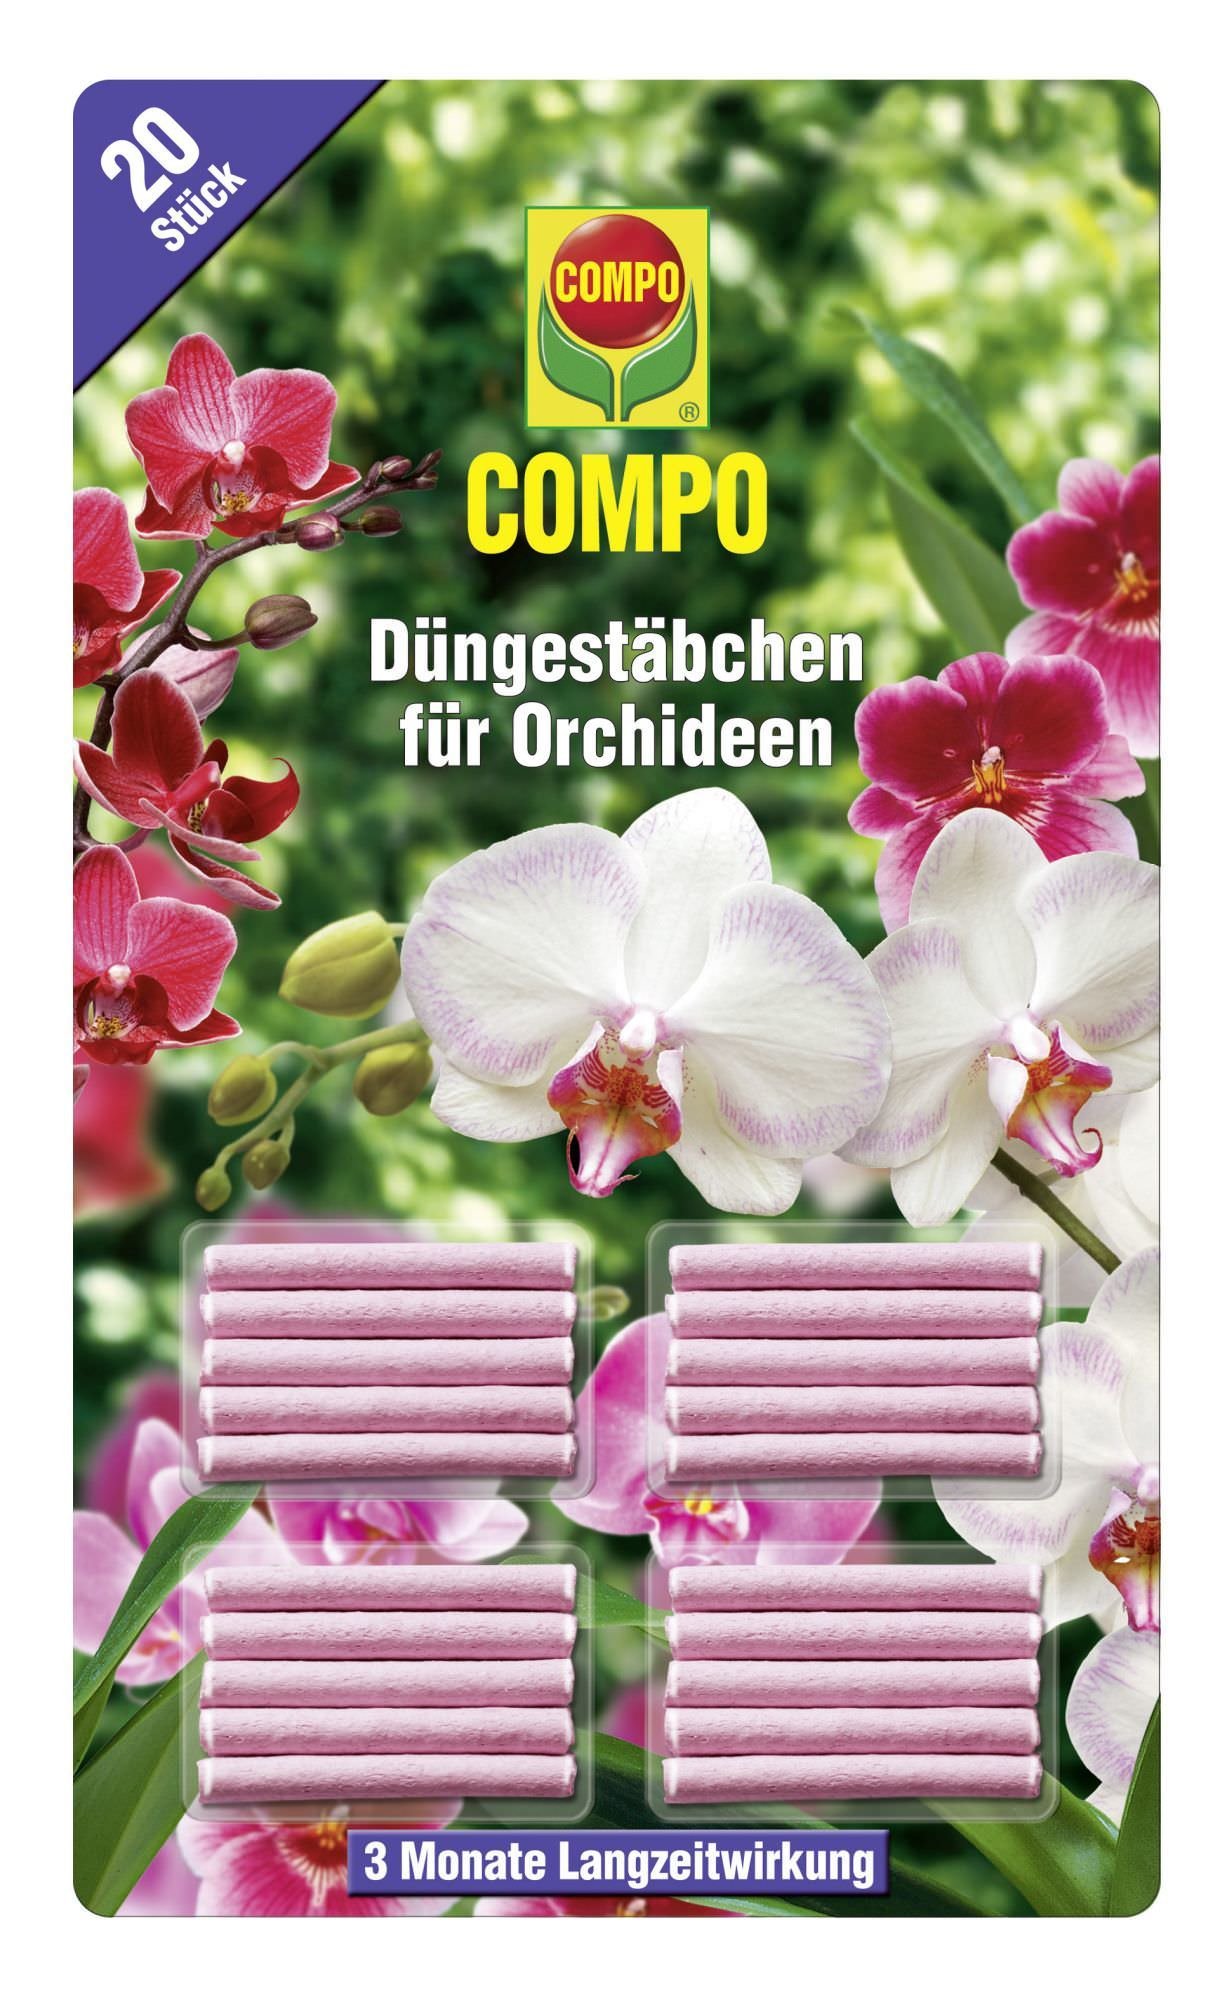 Orchidėjų trąšų lazdelės COMPO, 20 vnt.